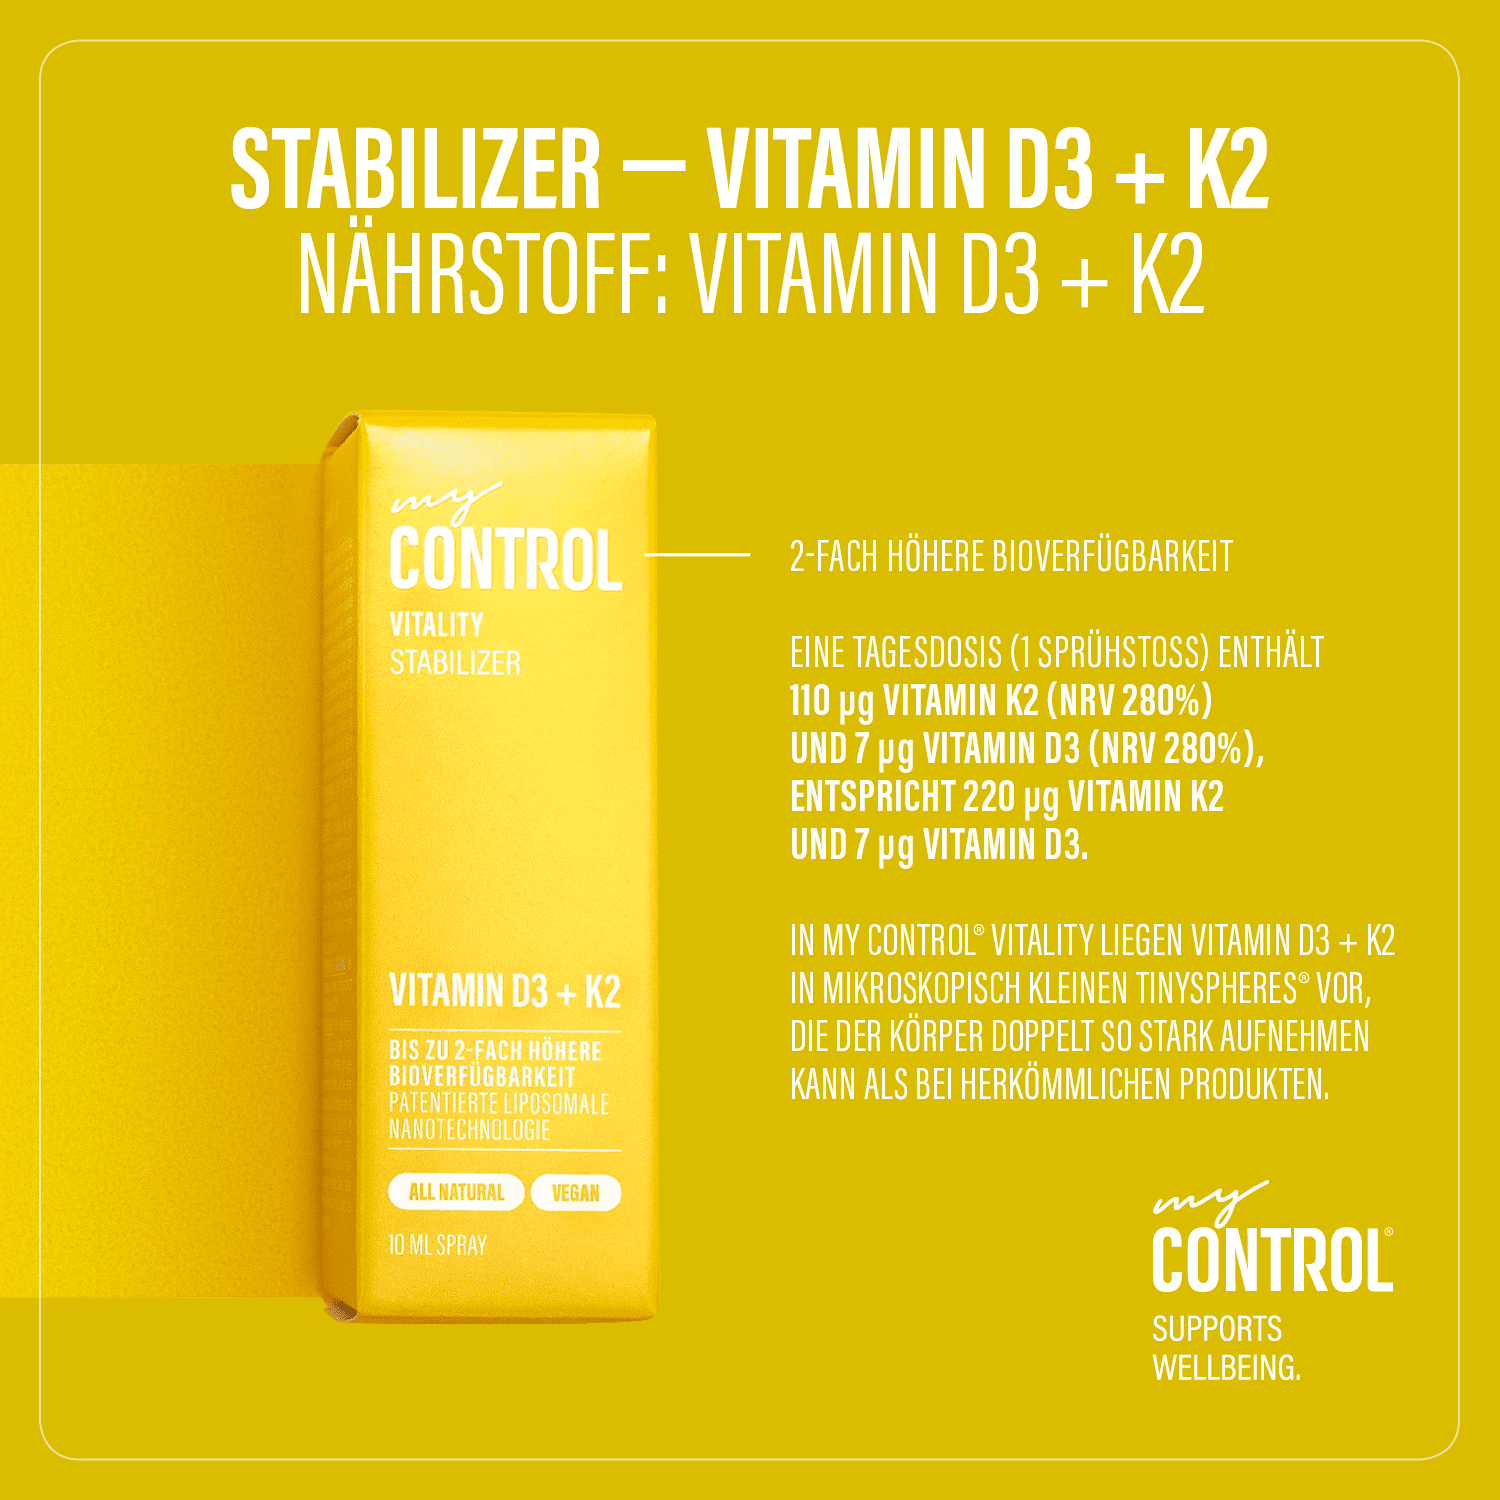 Stabilizer – Vitamin D3 + K2